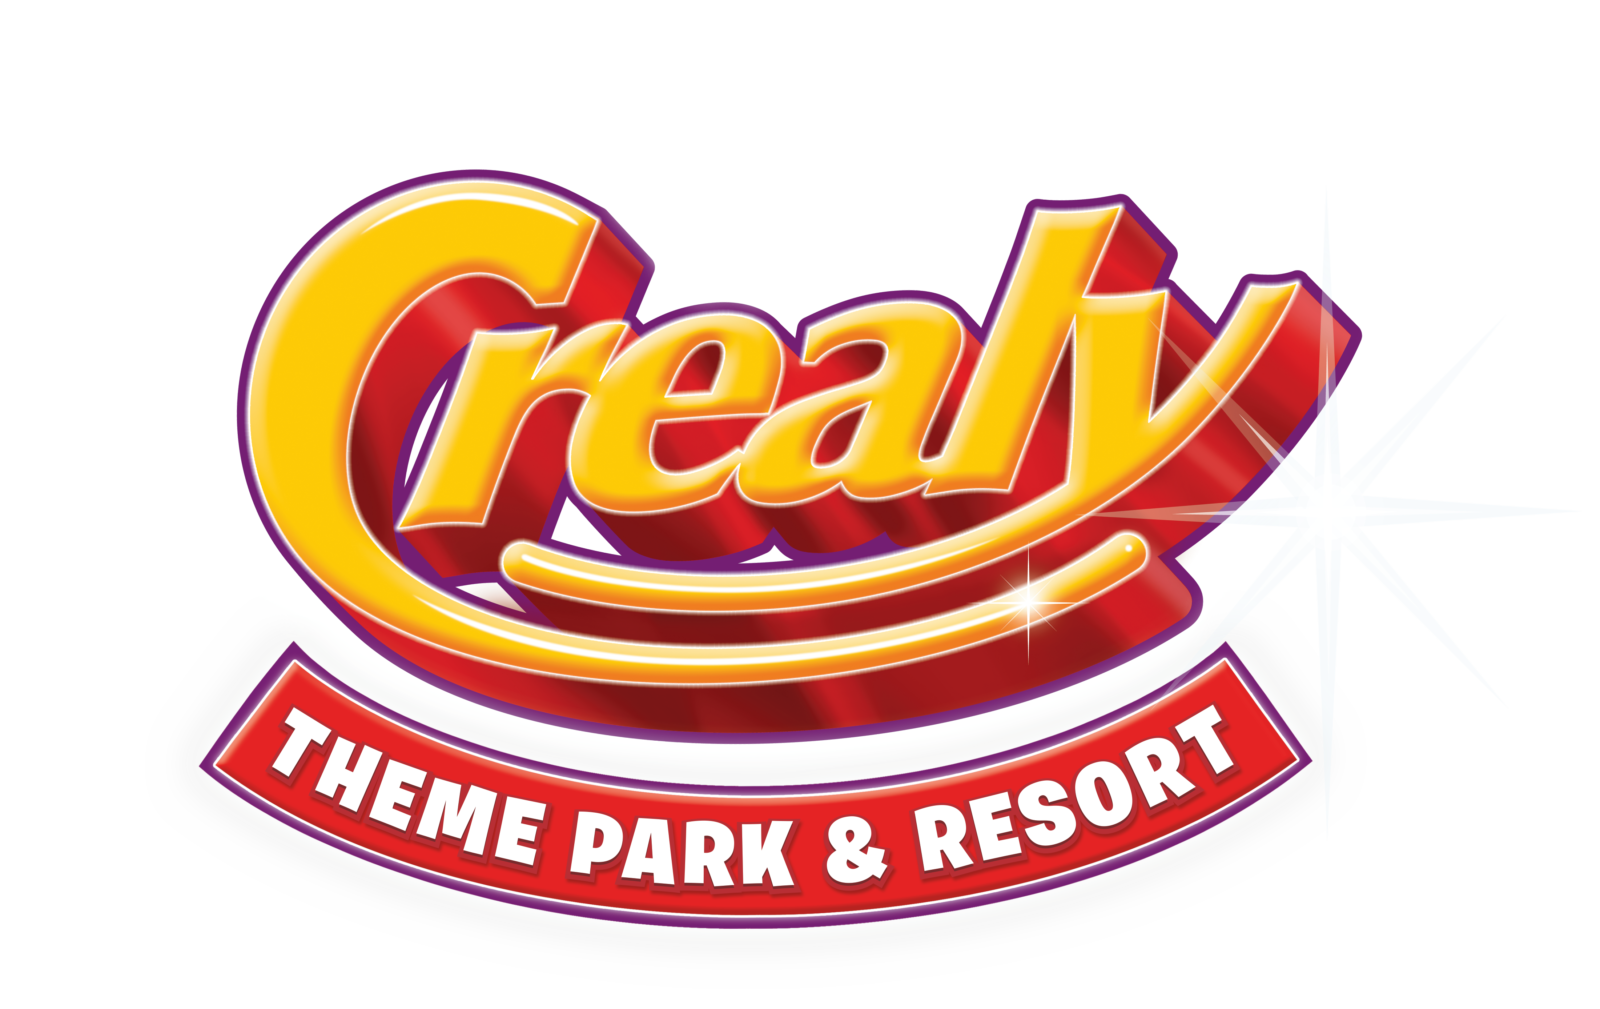 crealy-resort-logo